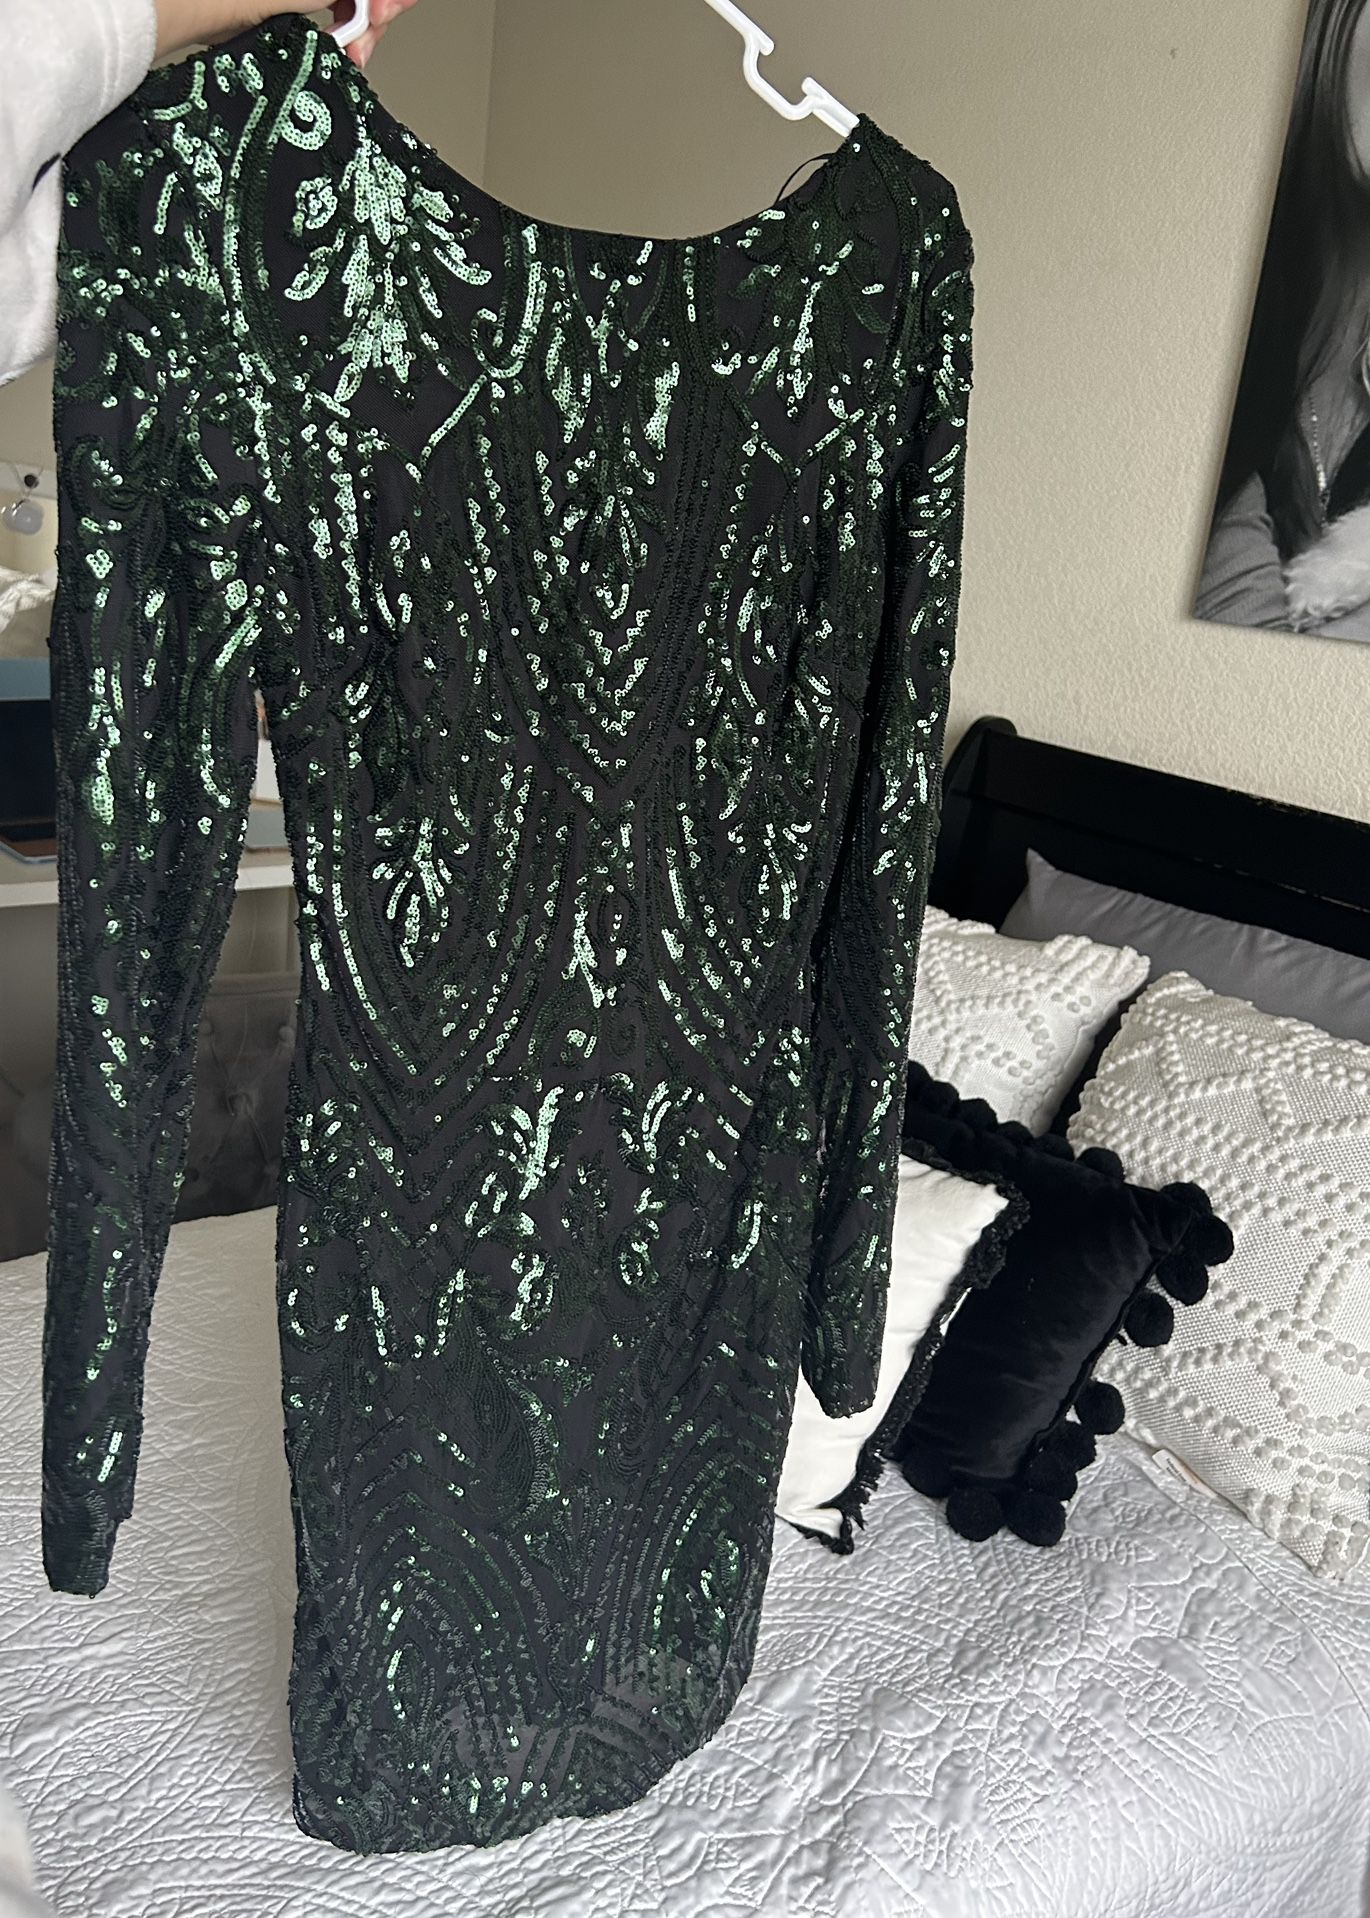 Windsor Black And Green Sequin Dress (Medium)